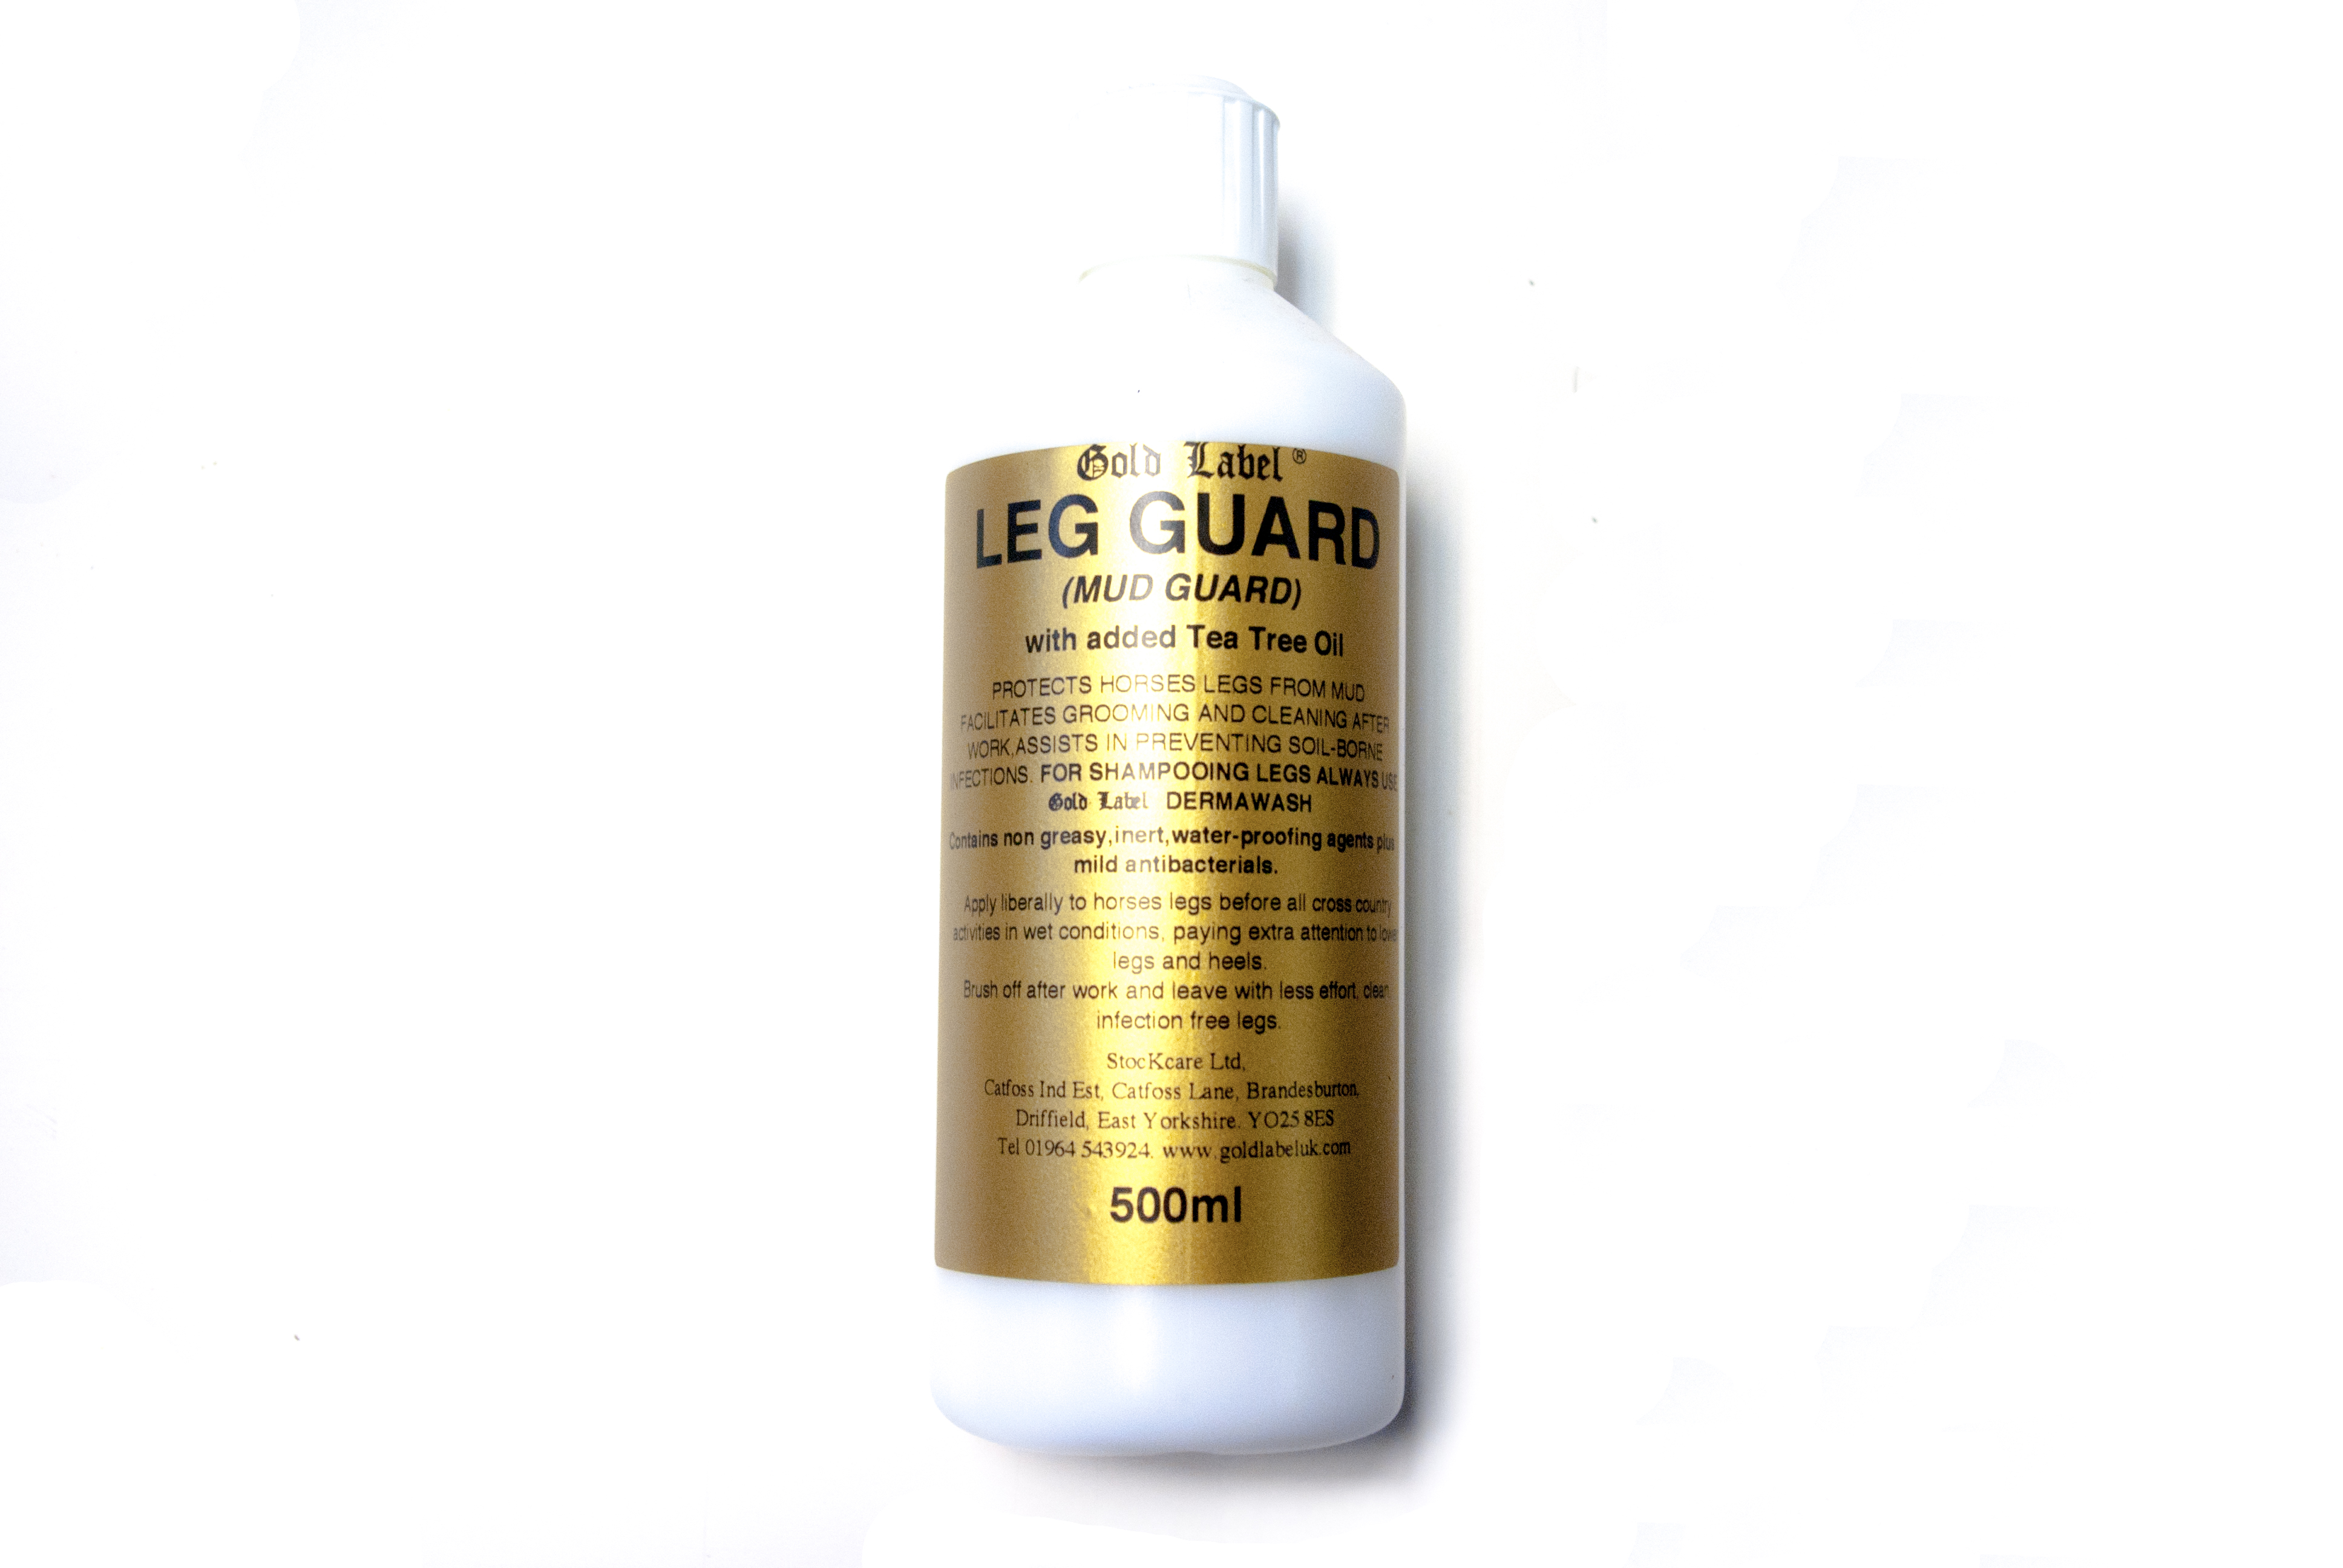 Gold Label leg guard 500ml